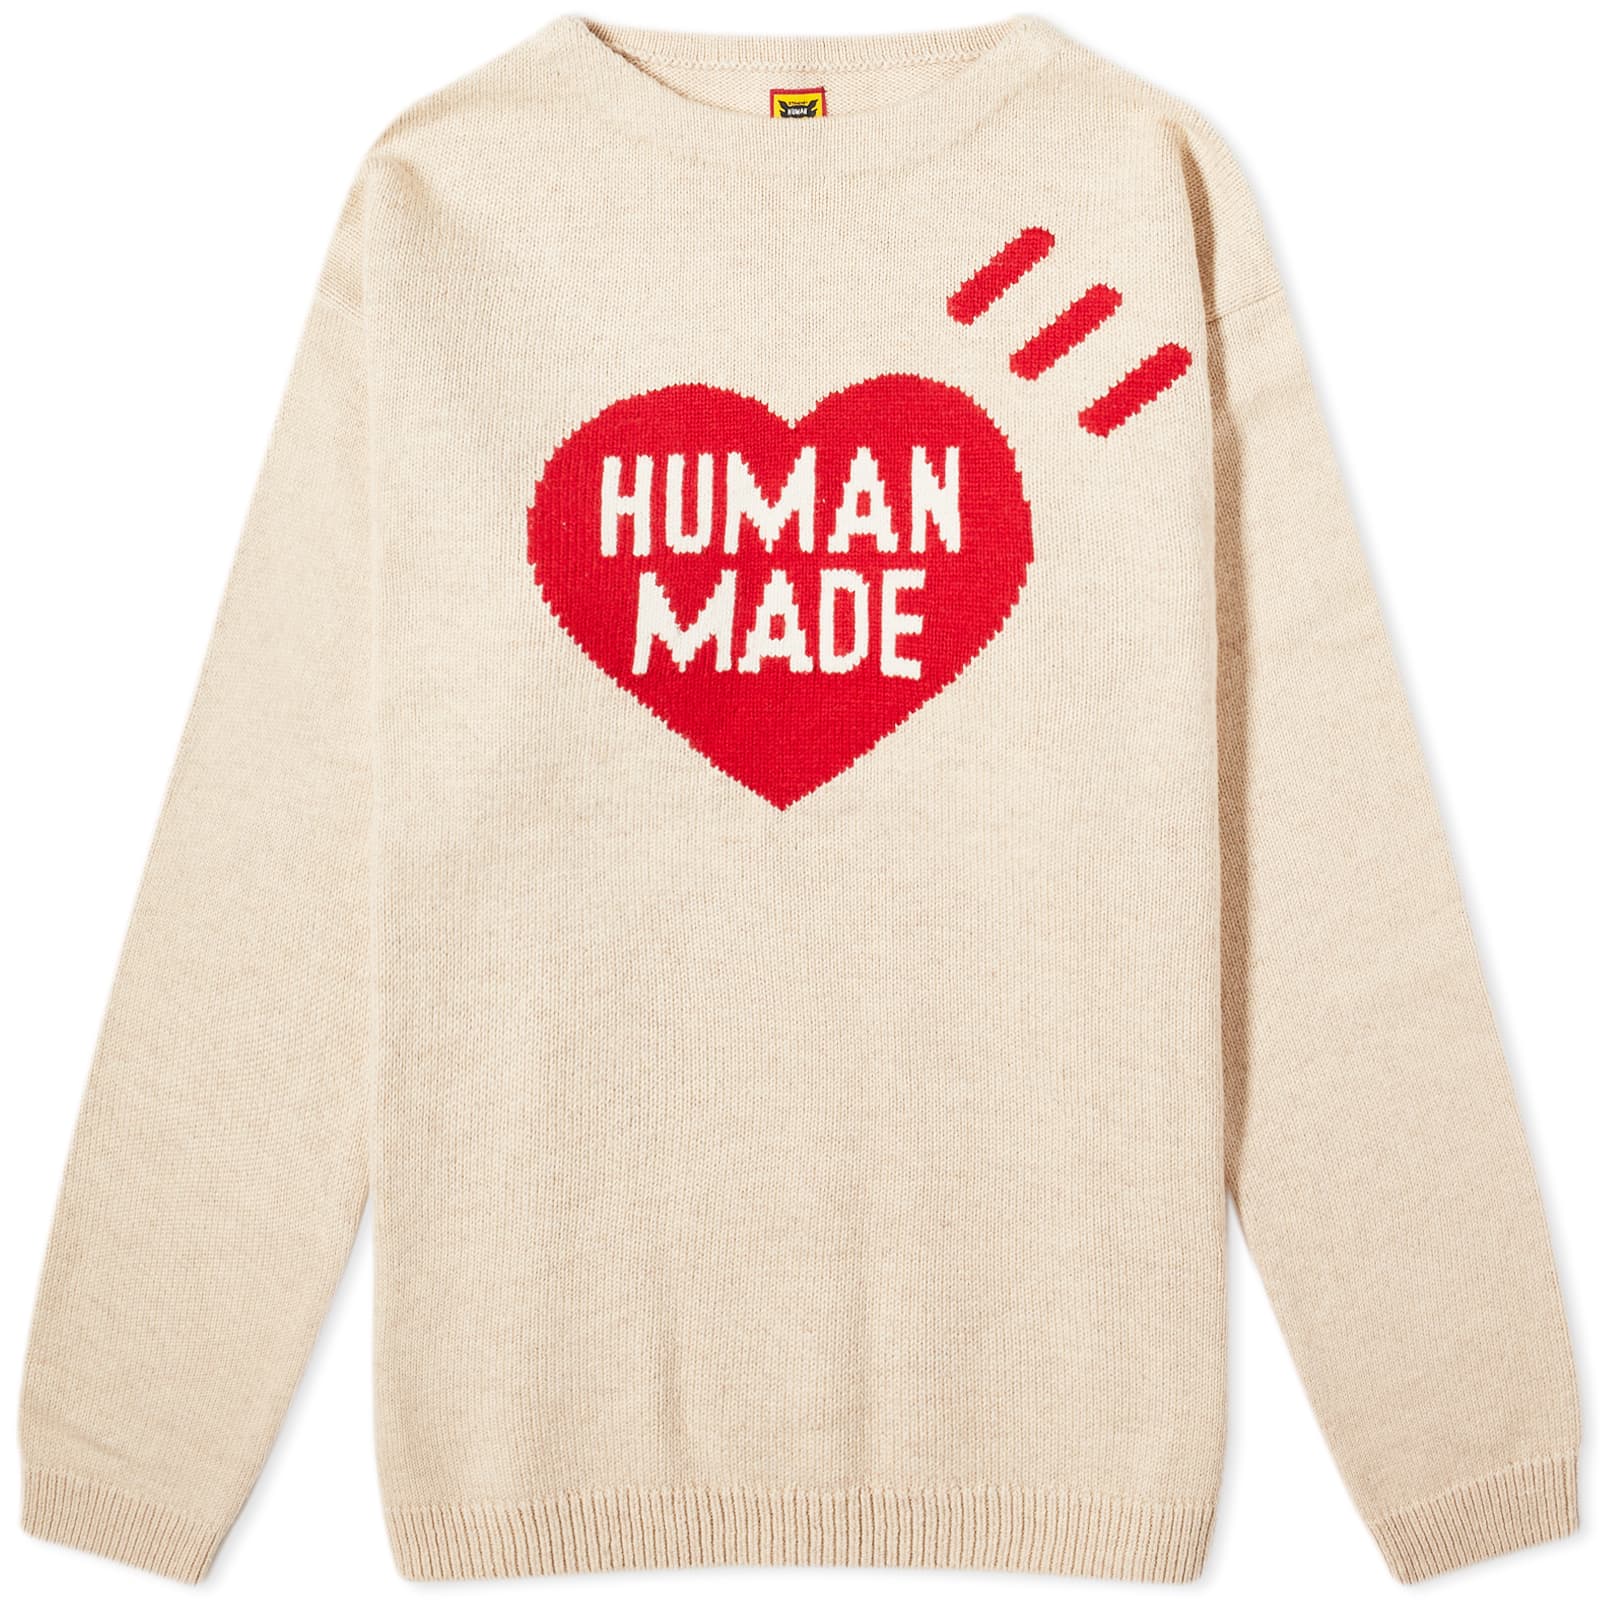 Свитер Human Made Heart Knit, бежевый human made lamb velvet jacket snow mountain heart embroidery men women 1 1 human made couples loose jacke